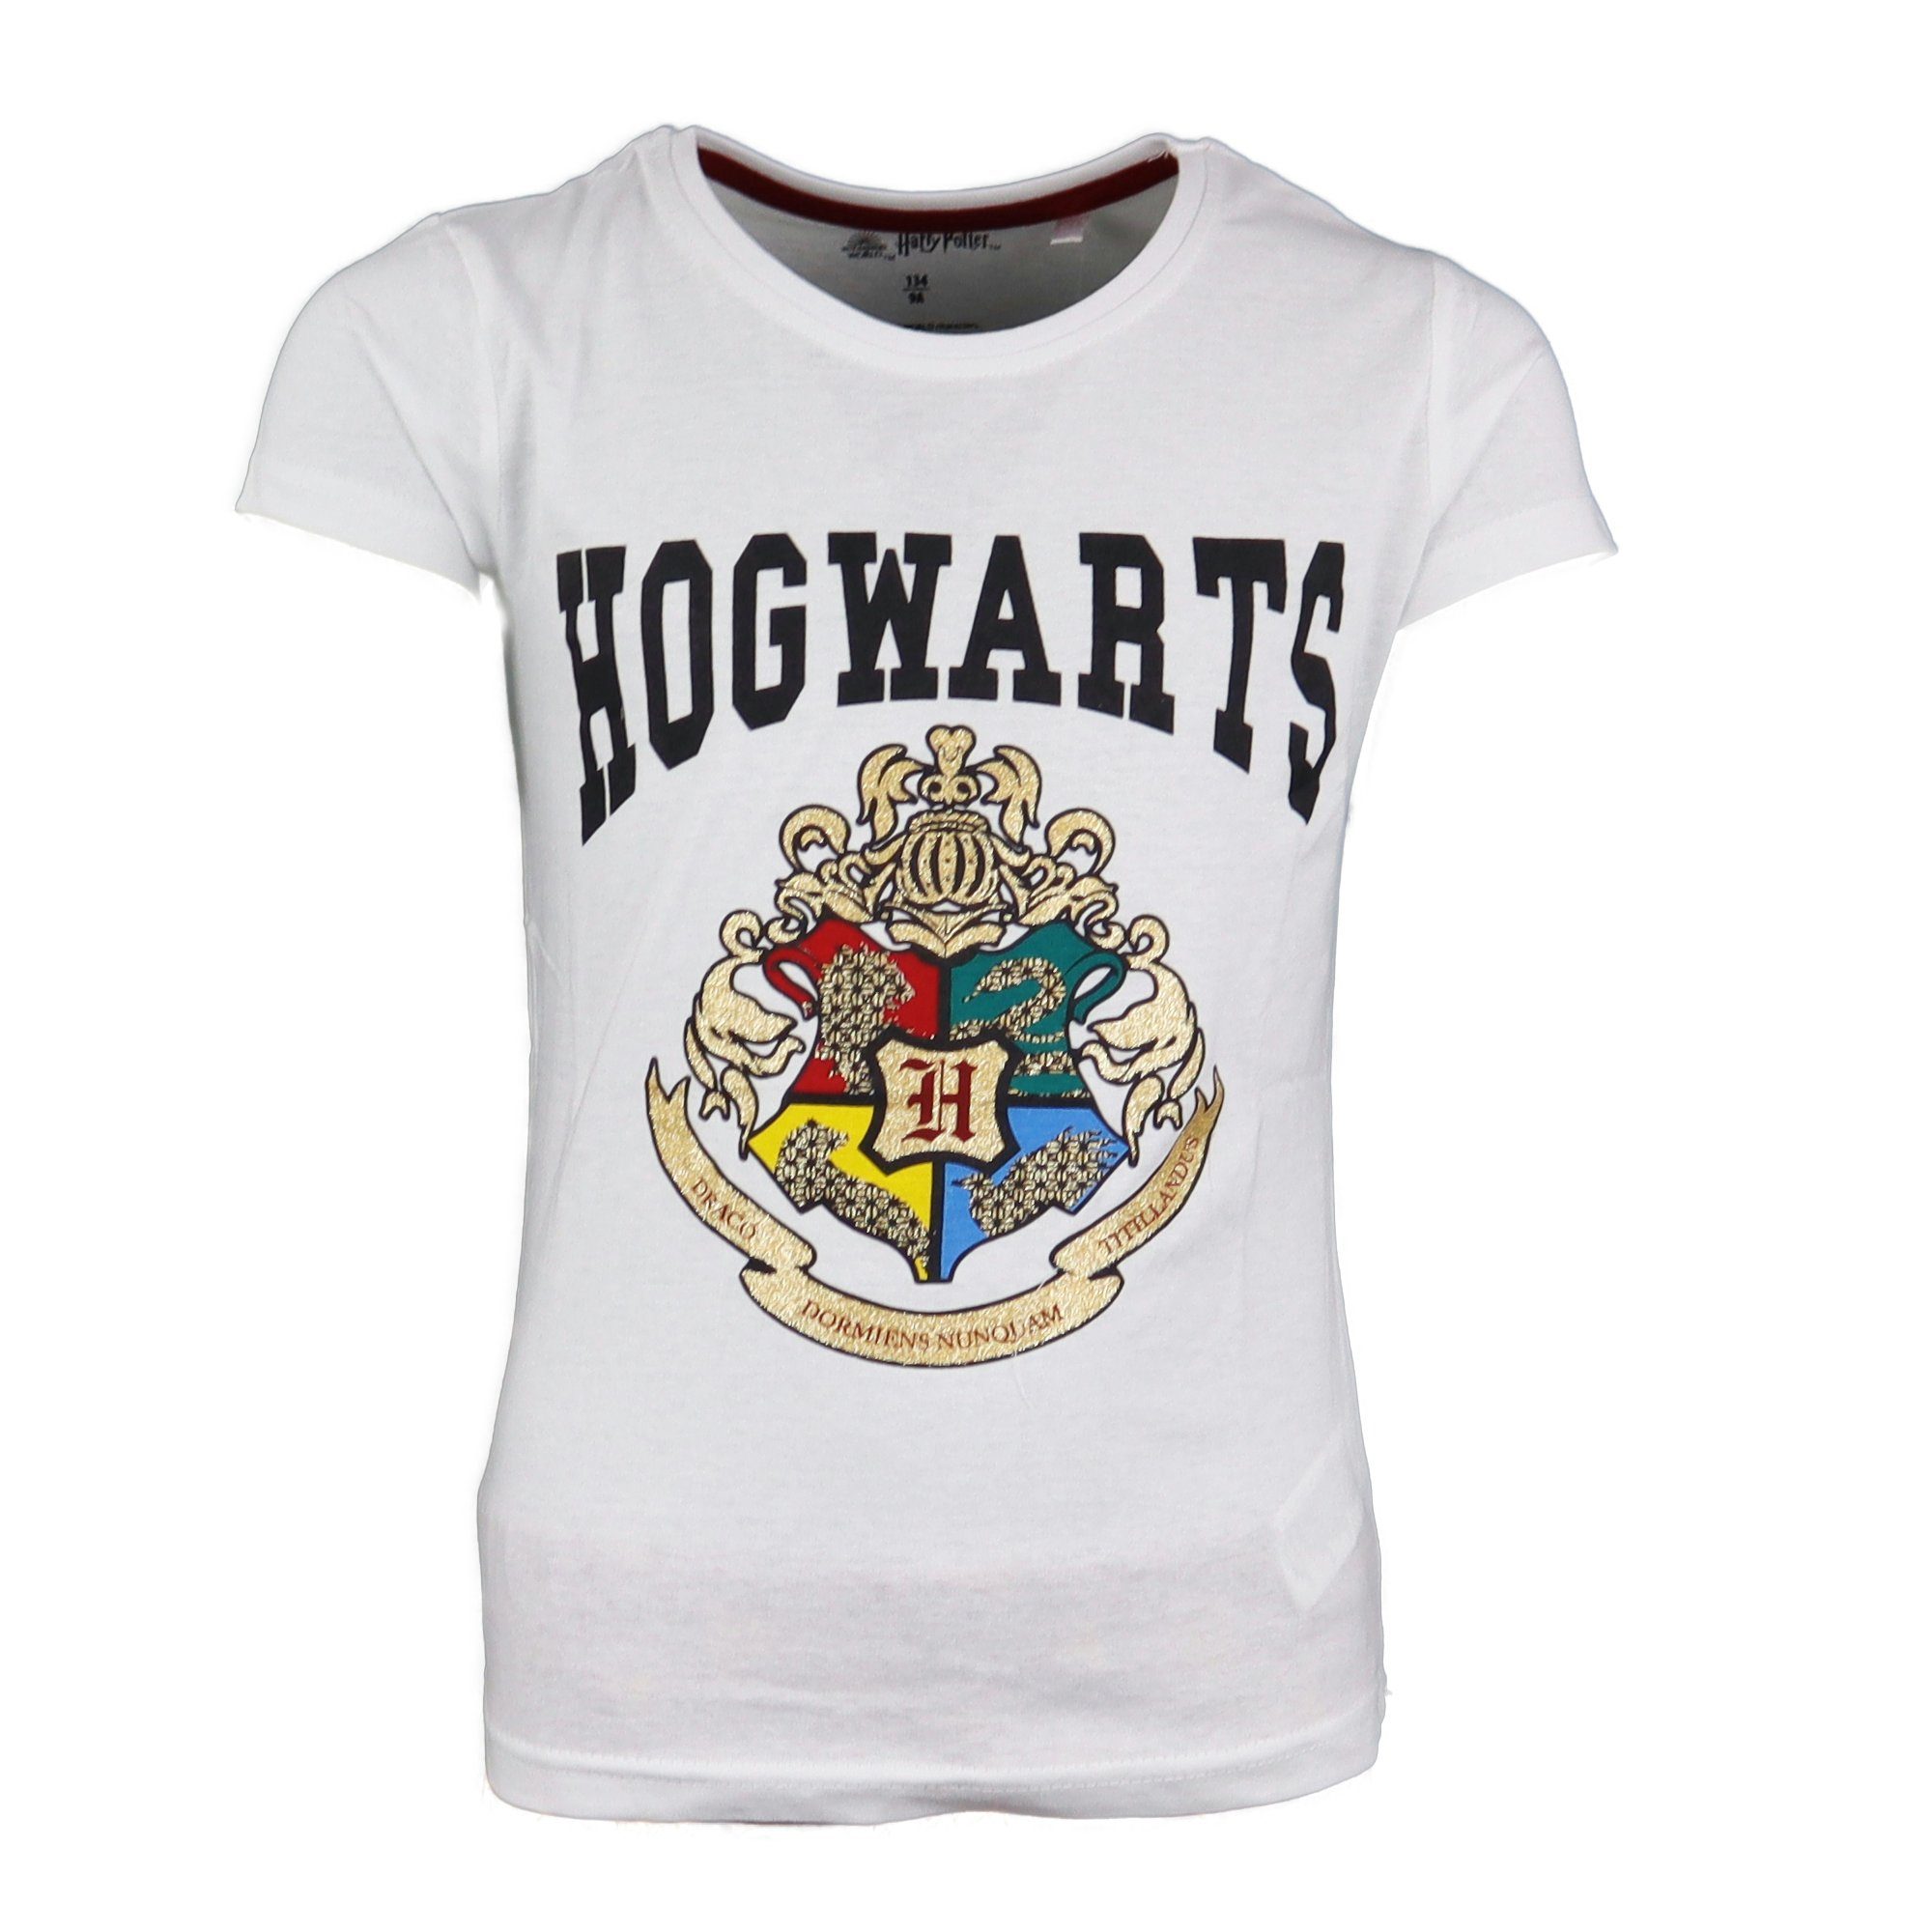 Harry Potter Print-Shirt Harry Potter Hogwarts Kinder Jugend T-Shirt Gr.  134 bis 164, 100% Baumwolle, Braun oder Weiß